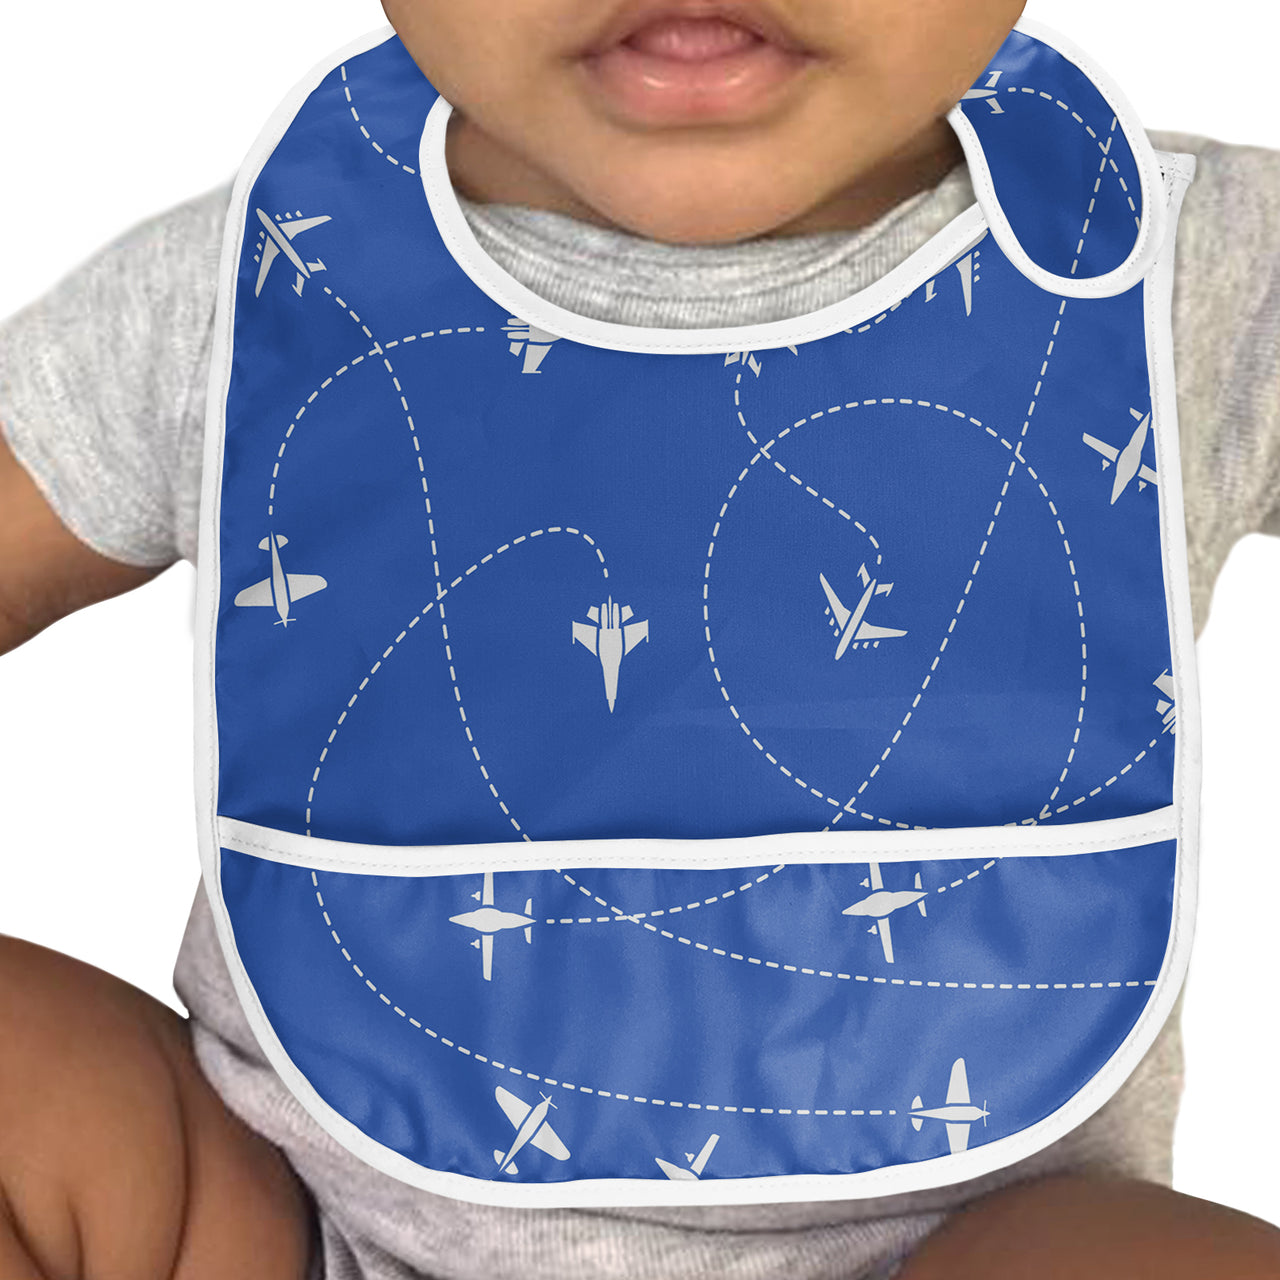 Travel The World By Plane (Blue) Designed Baby Bib